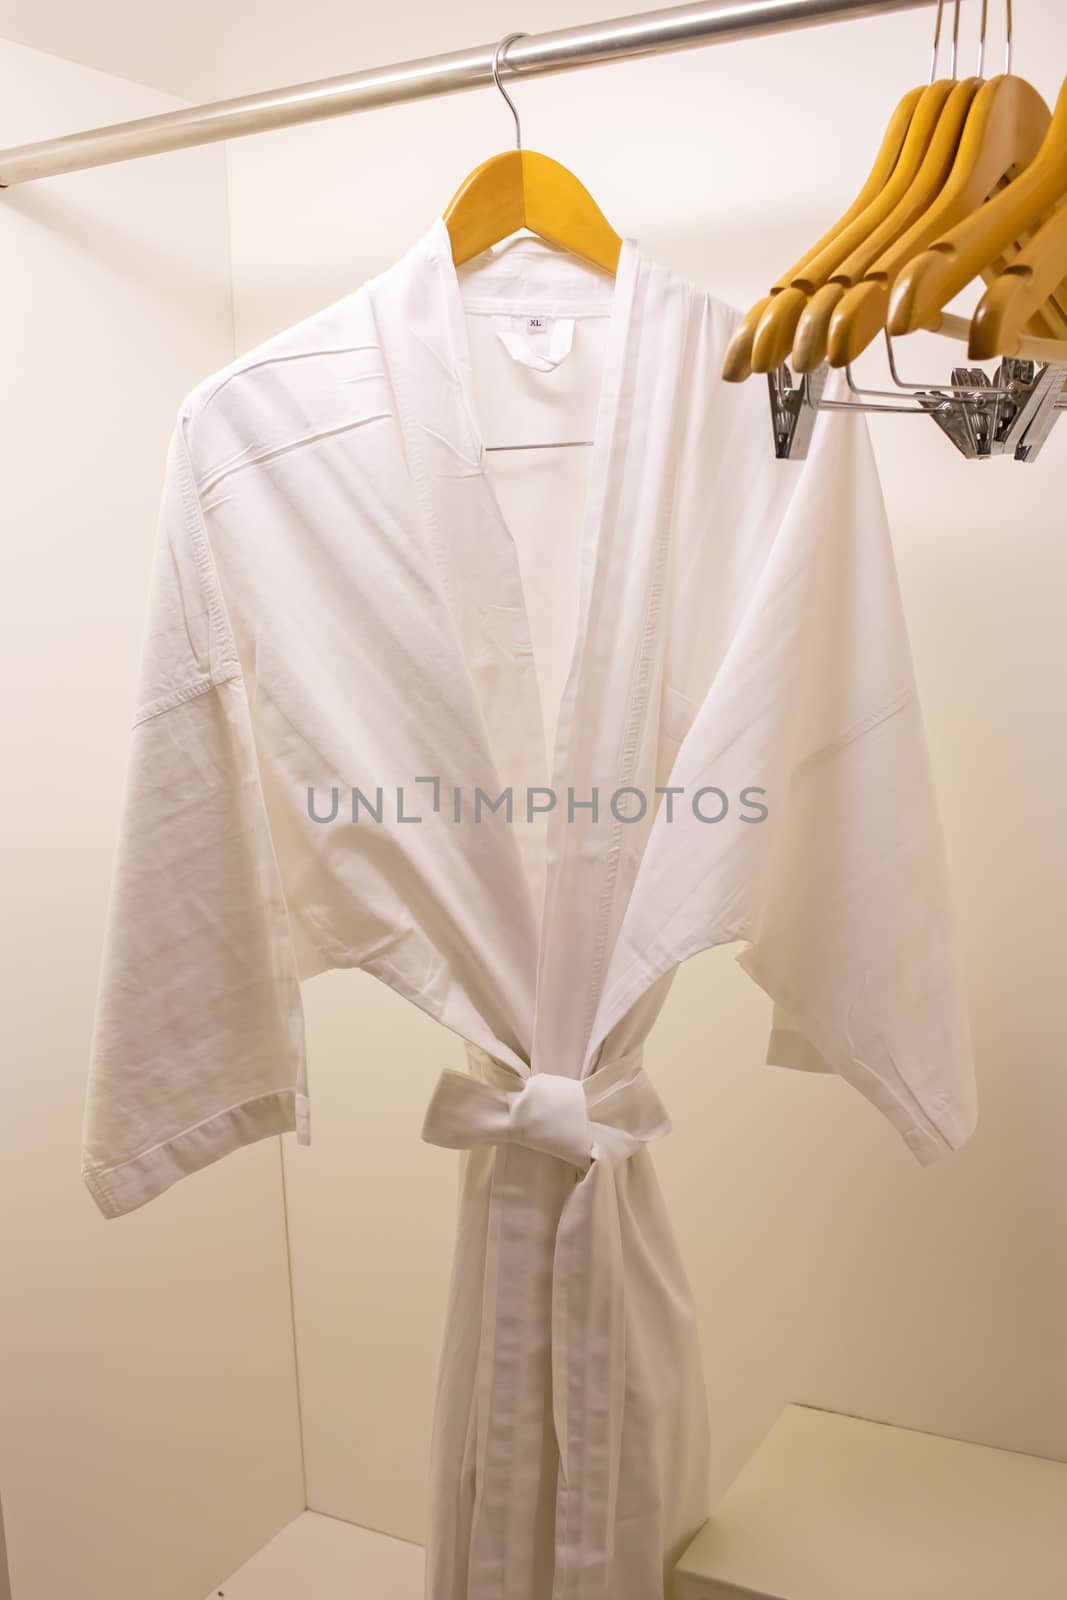 Spa bathrobes hanging in wardrobe by Gobba17